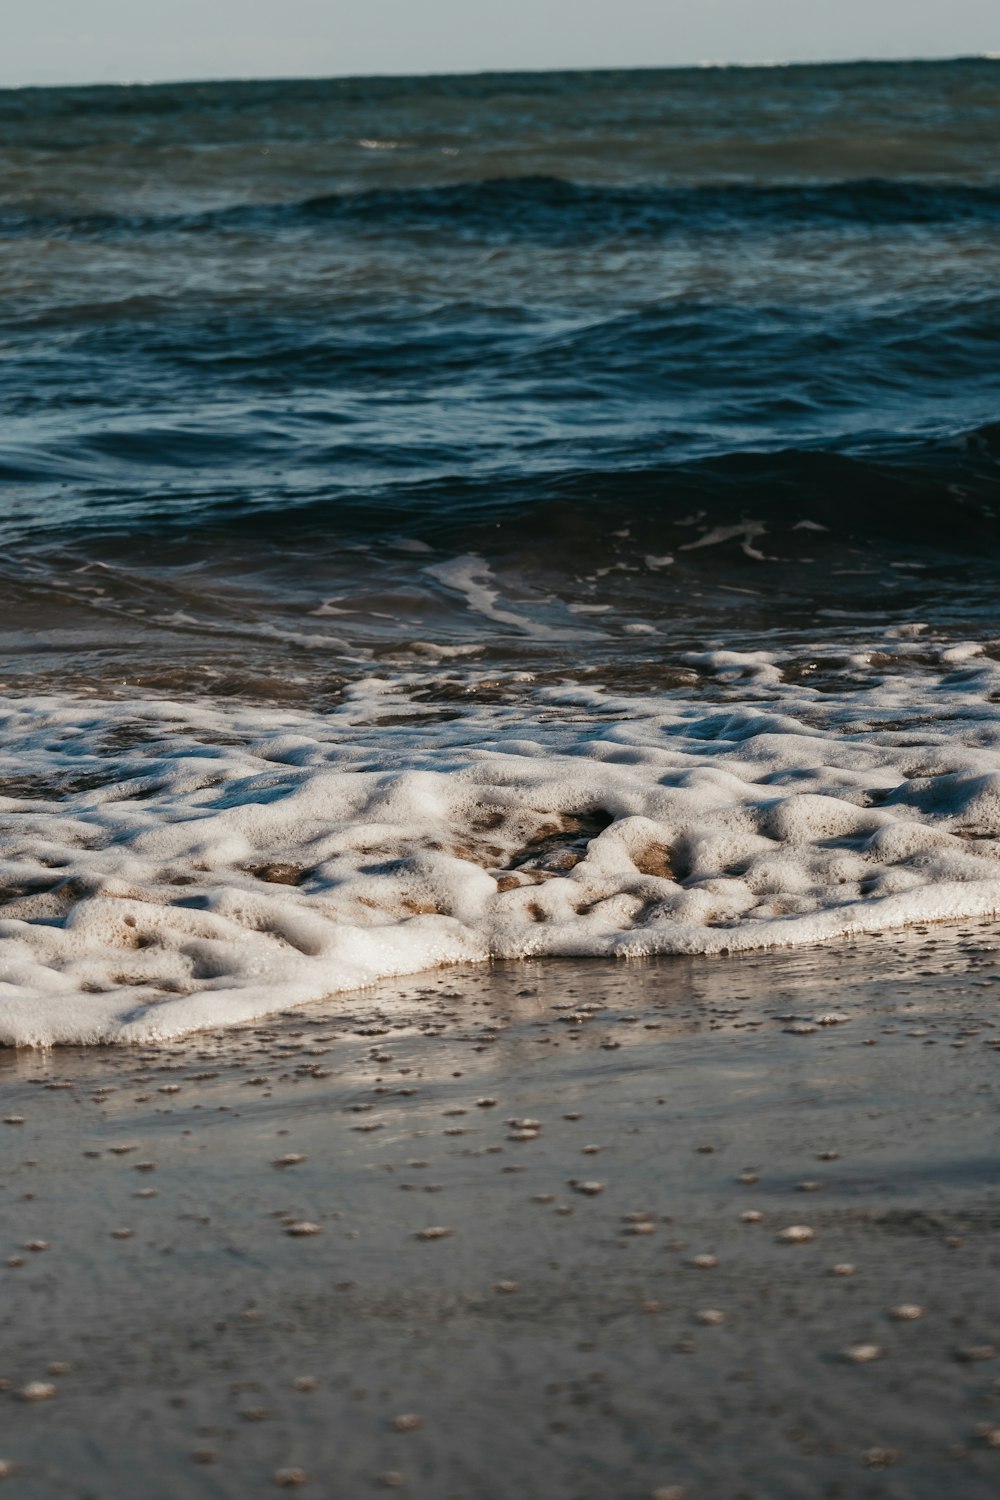 a bird standing on top of a sandy beach next to the ocean